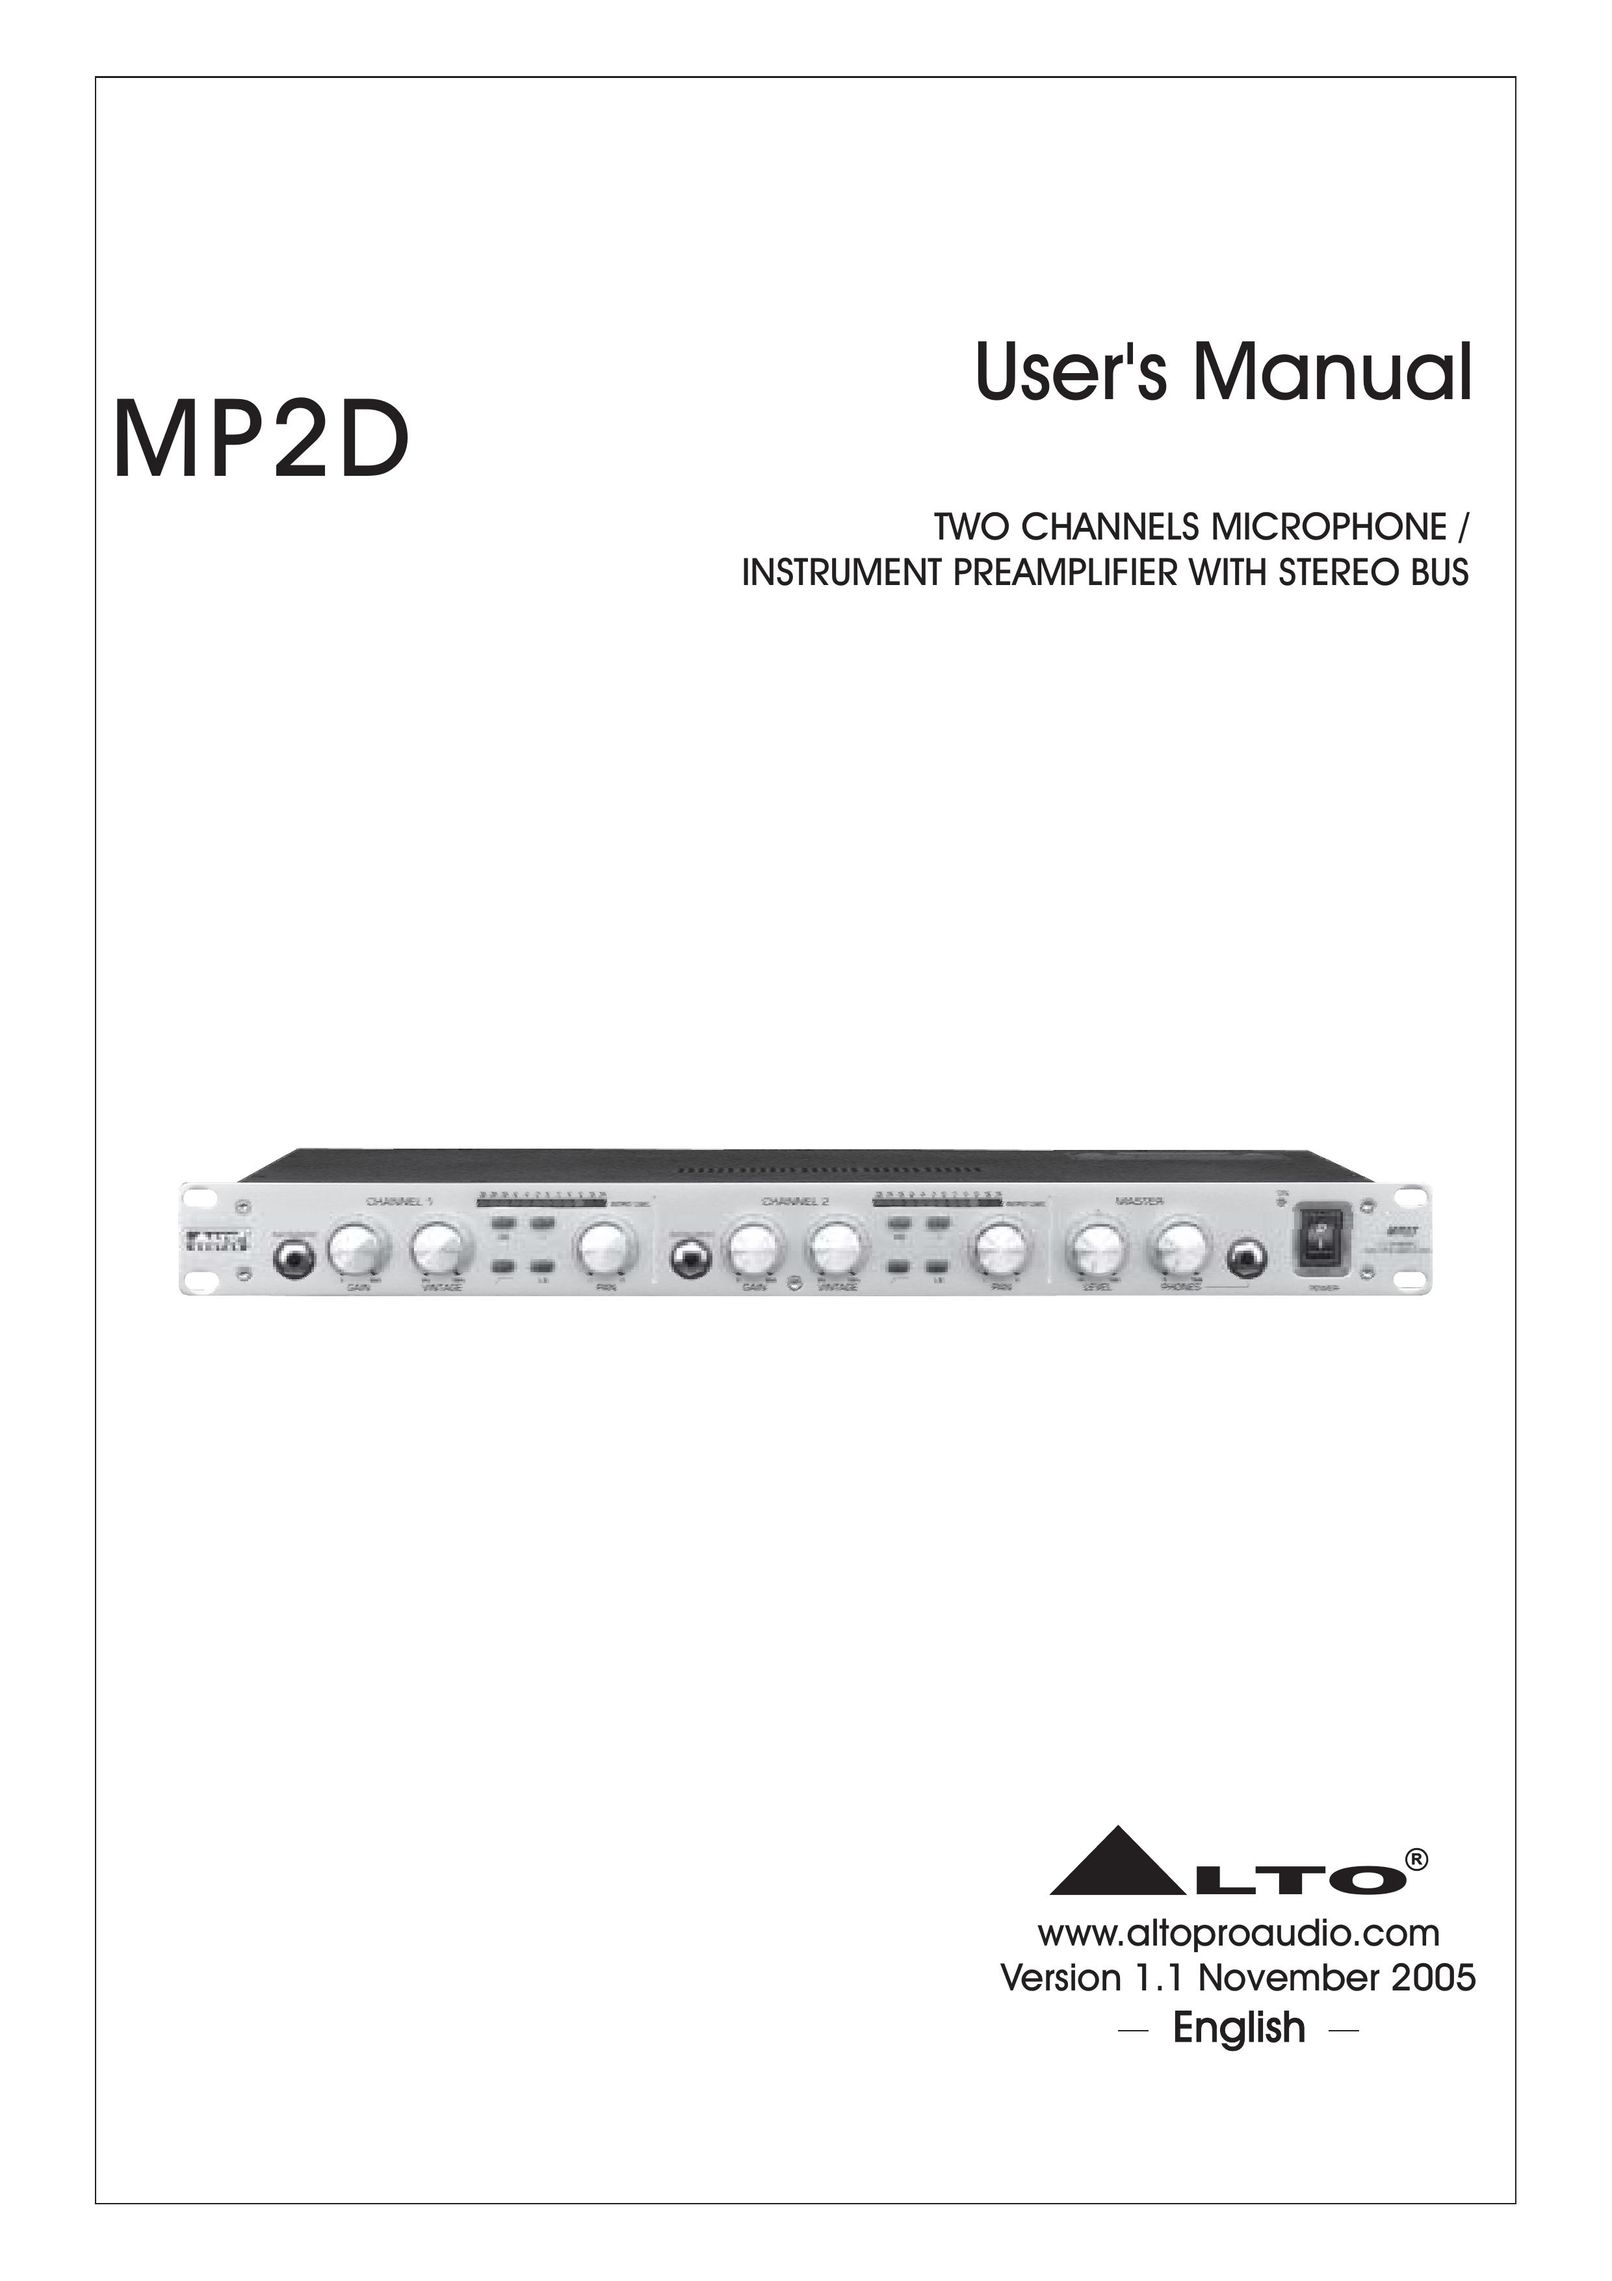 Nilfisk-ALTO MP2D Stereo Amplifier User Manual